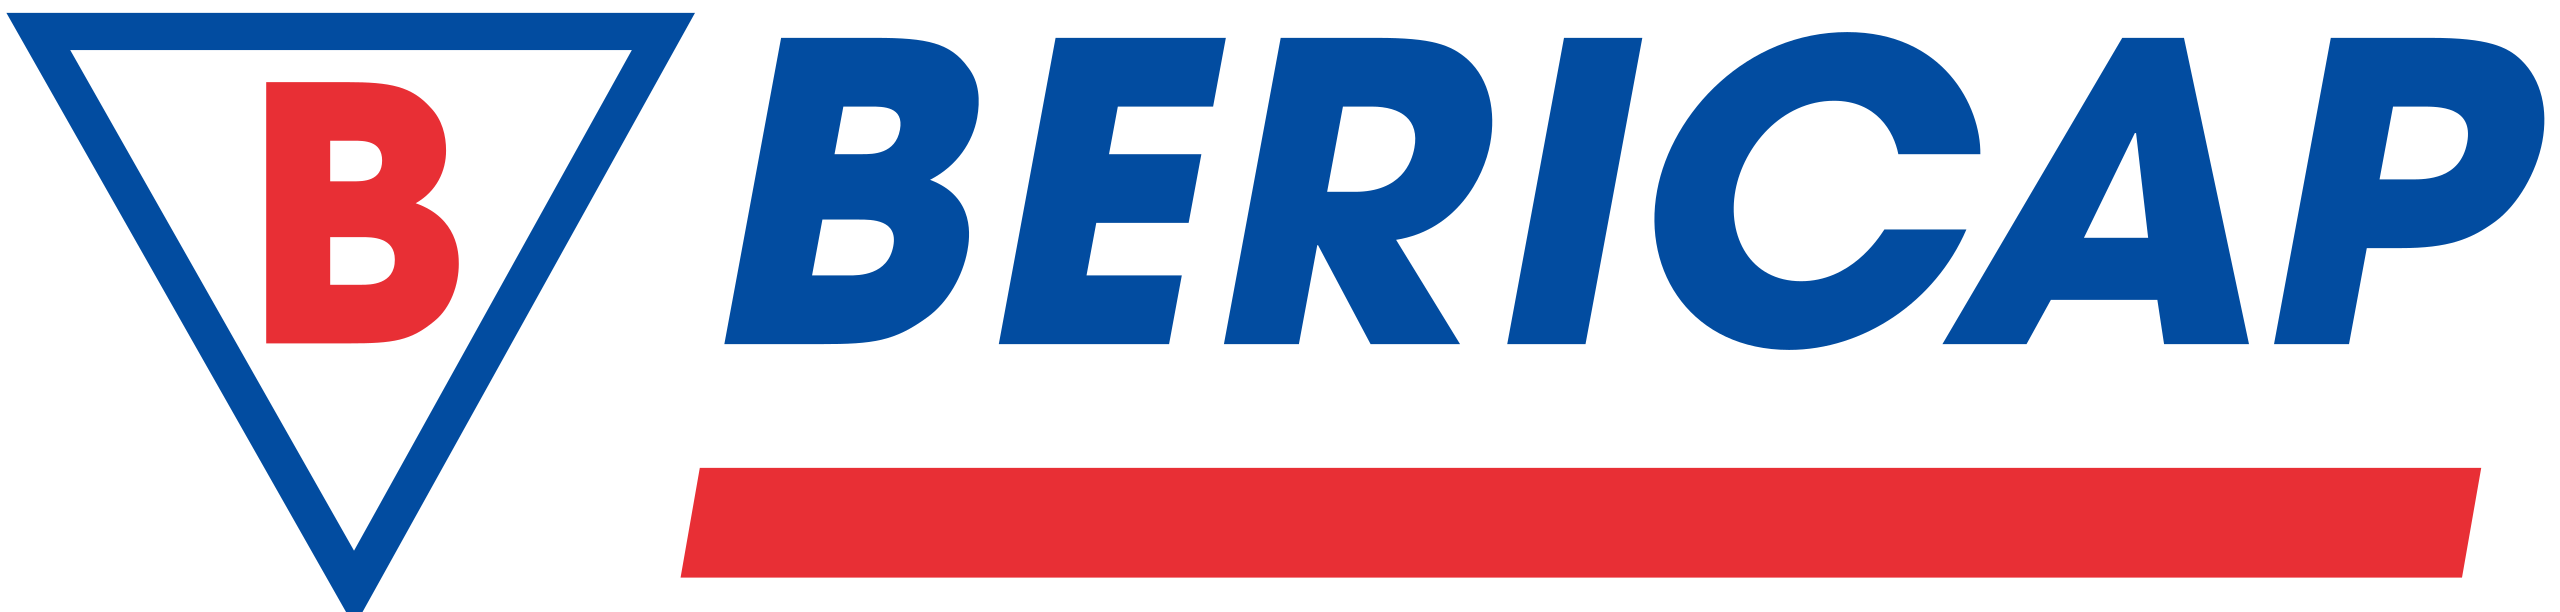 bericap_logo